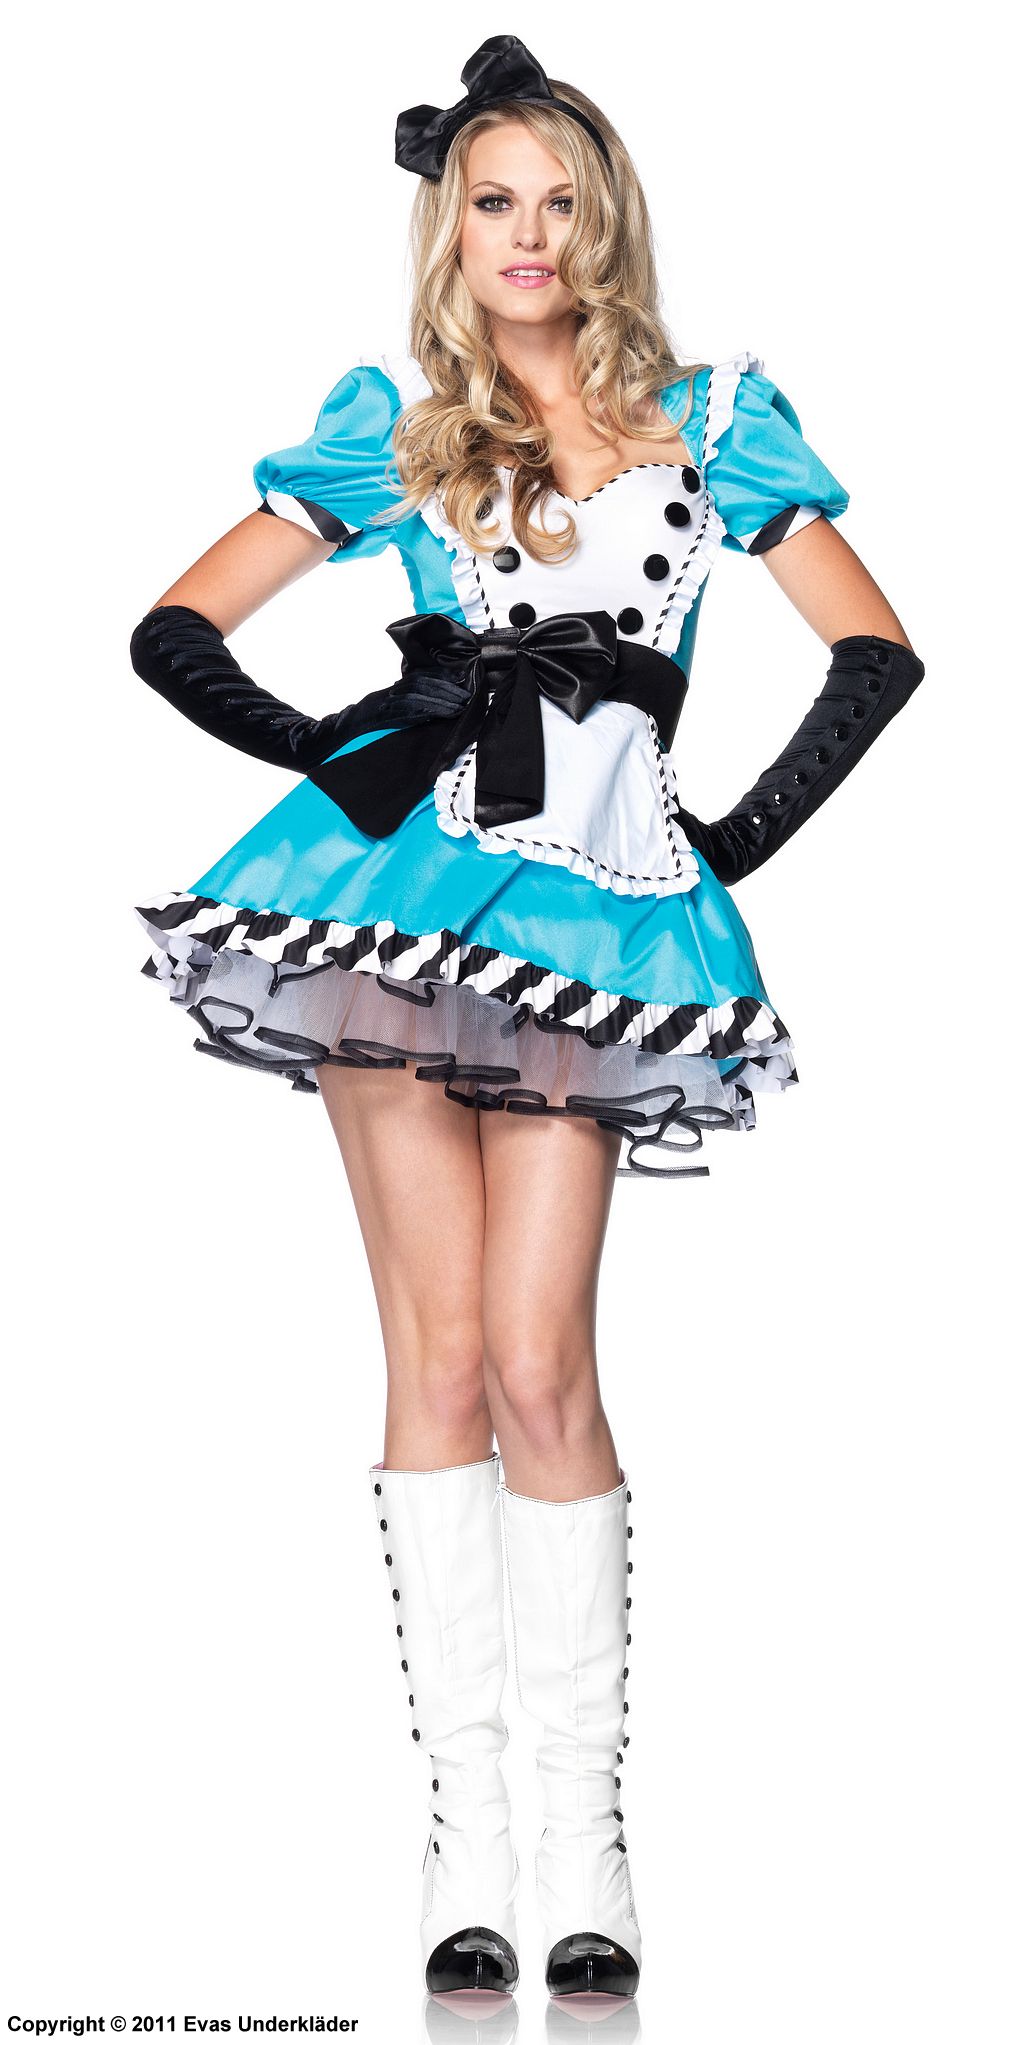 Alice in Wonderland, costume dress, ruffles, big bow, stripes